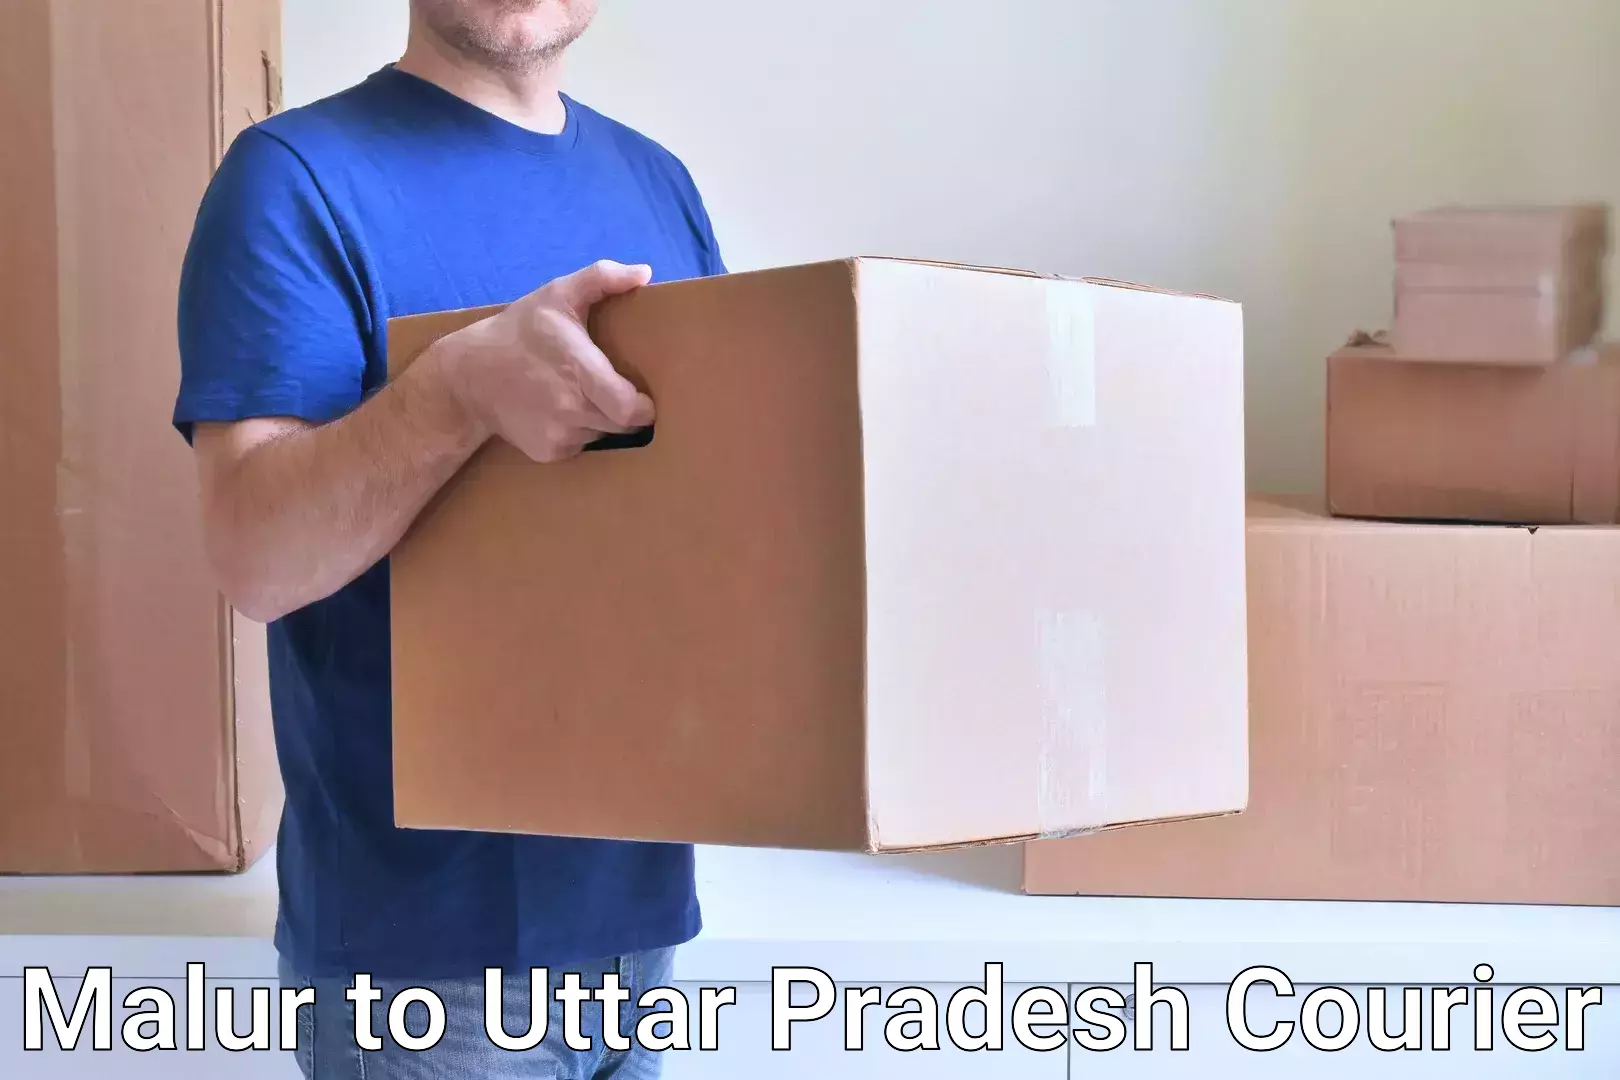 Courier service partnerships in Malur to Uttar Pradesh